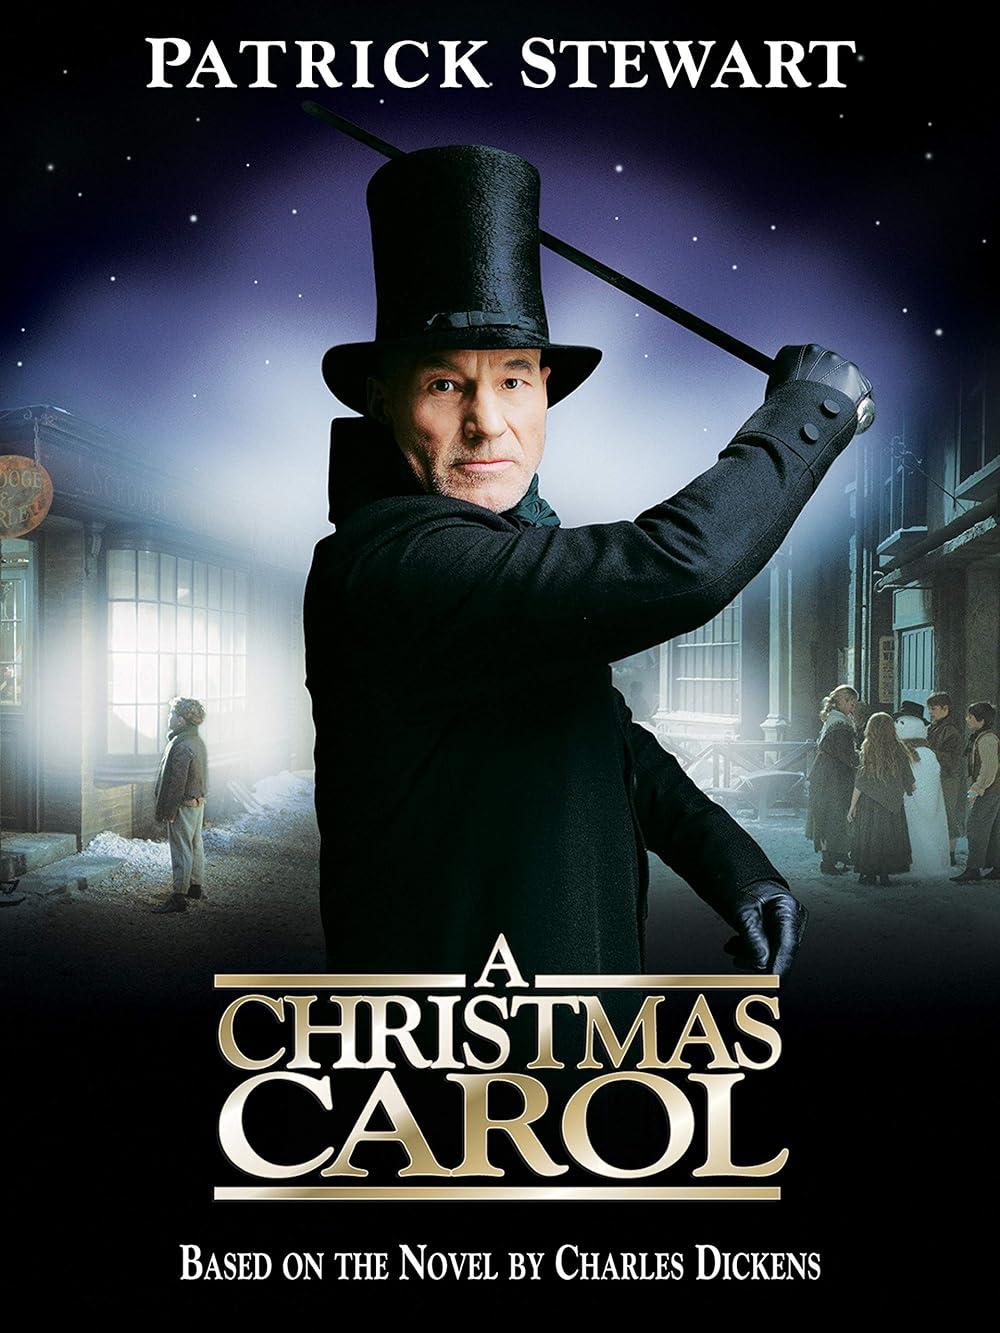 A Christmas Carol movie poster with Patrick Stewart